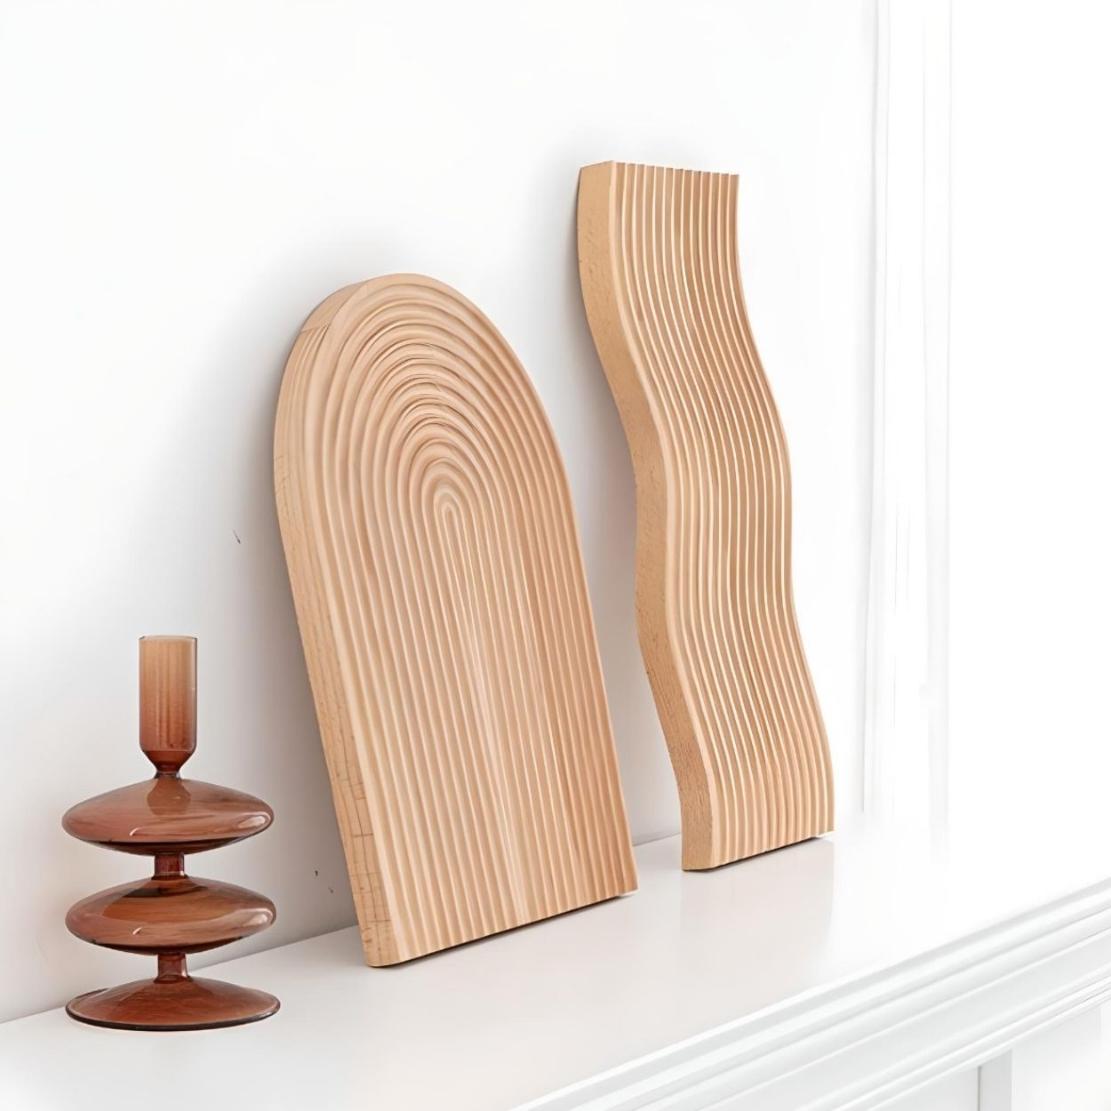 Light wood arch & wavy shape kitchen trays